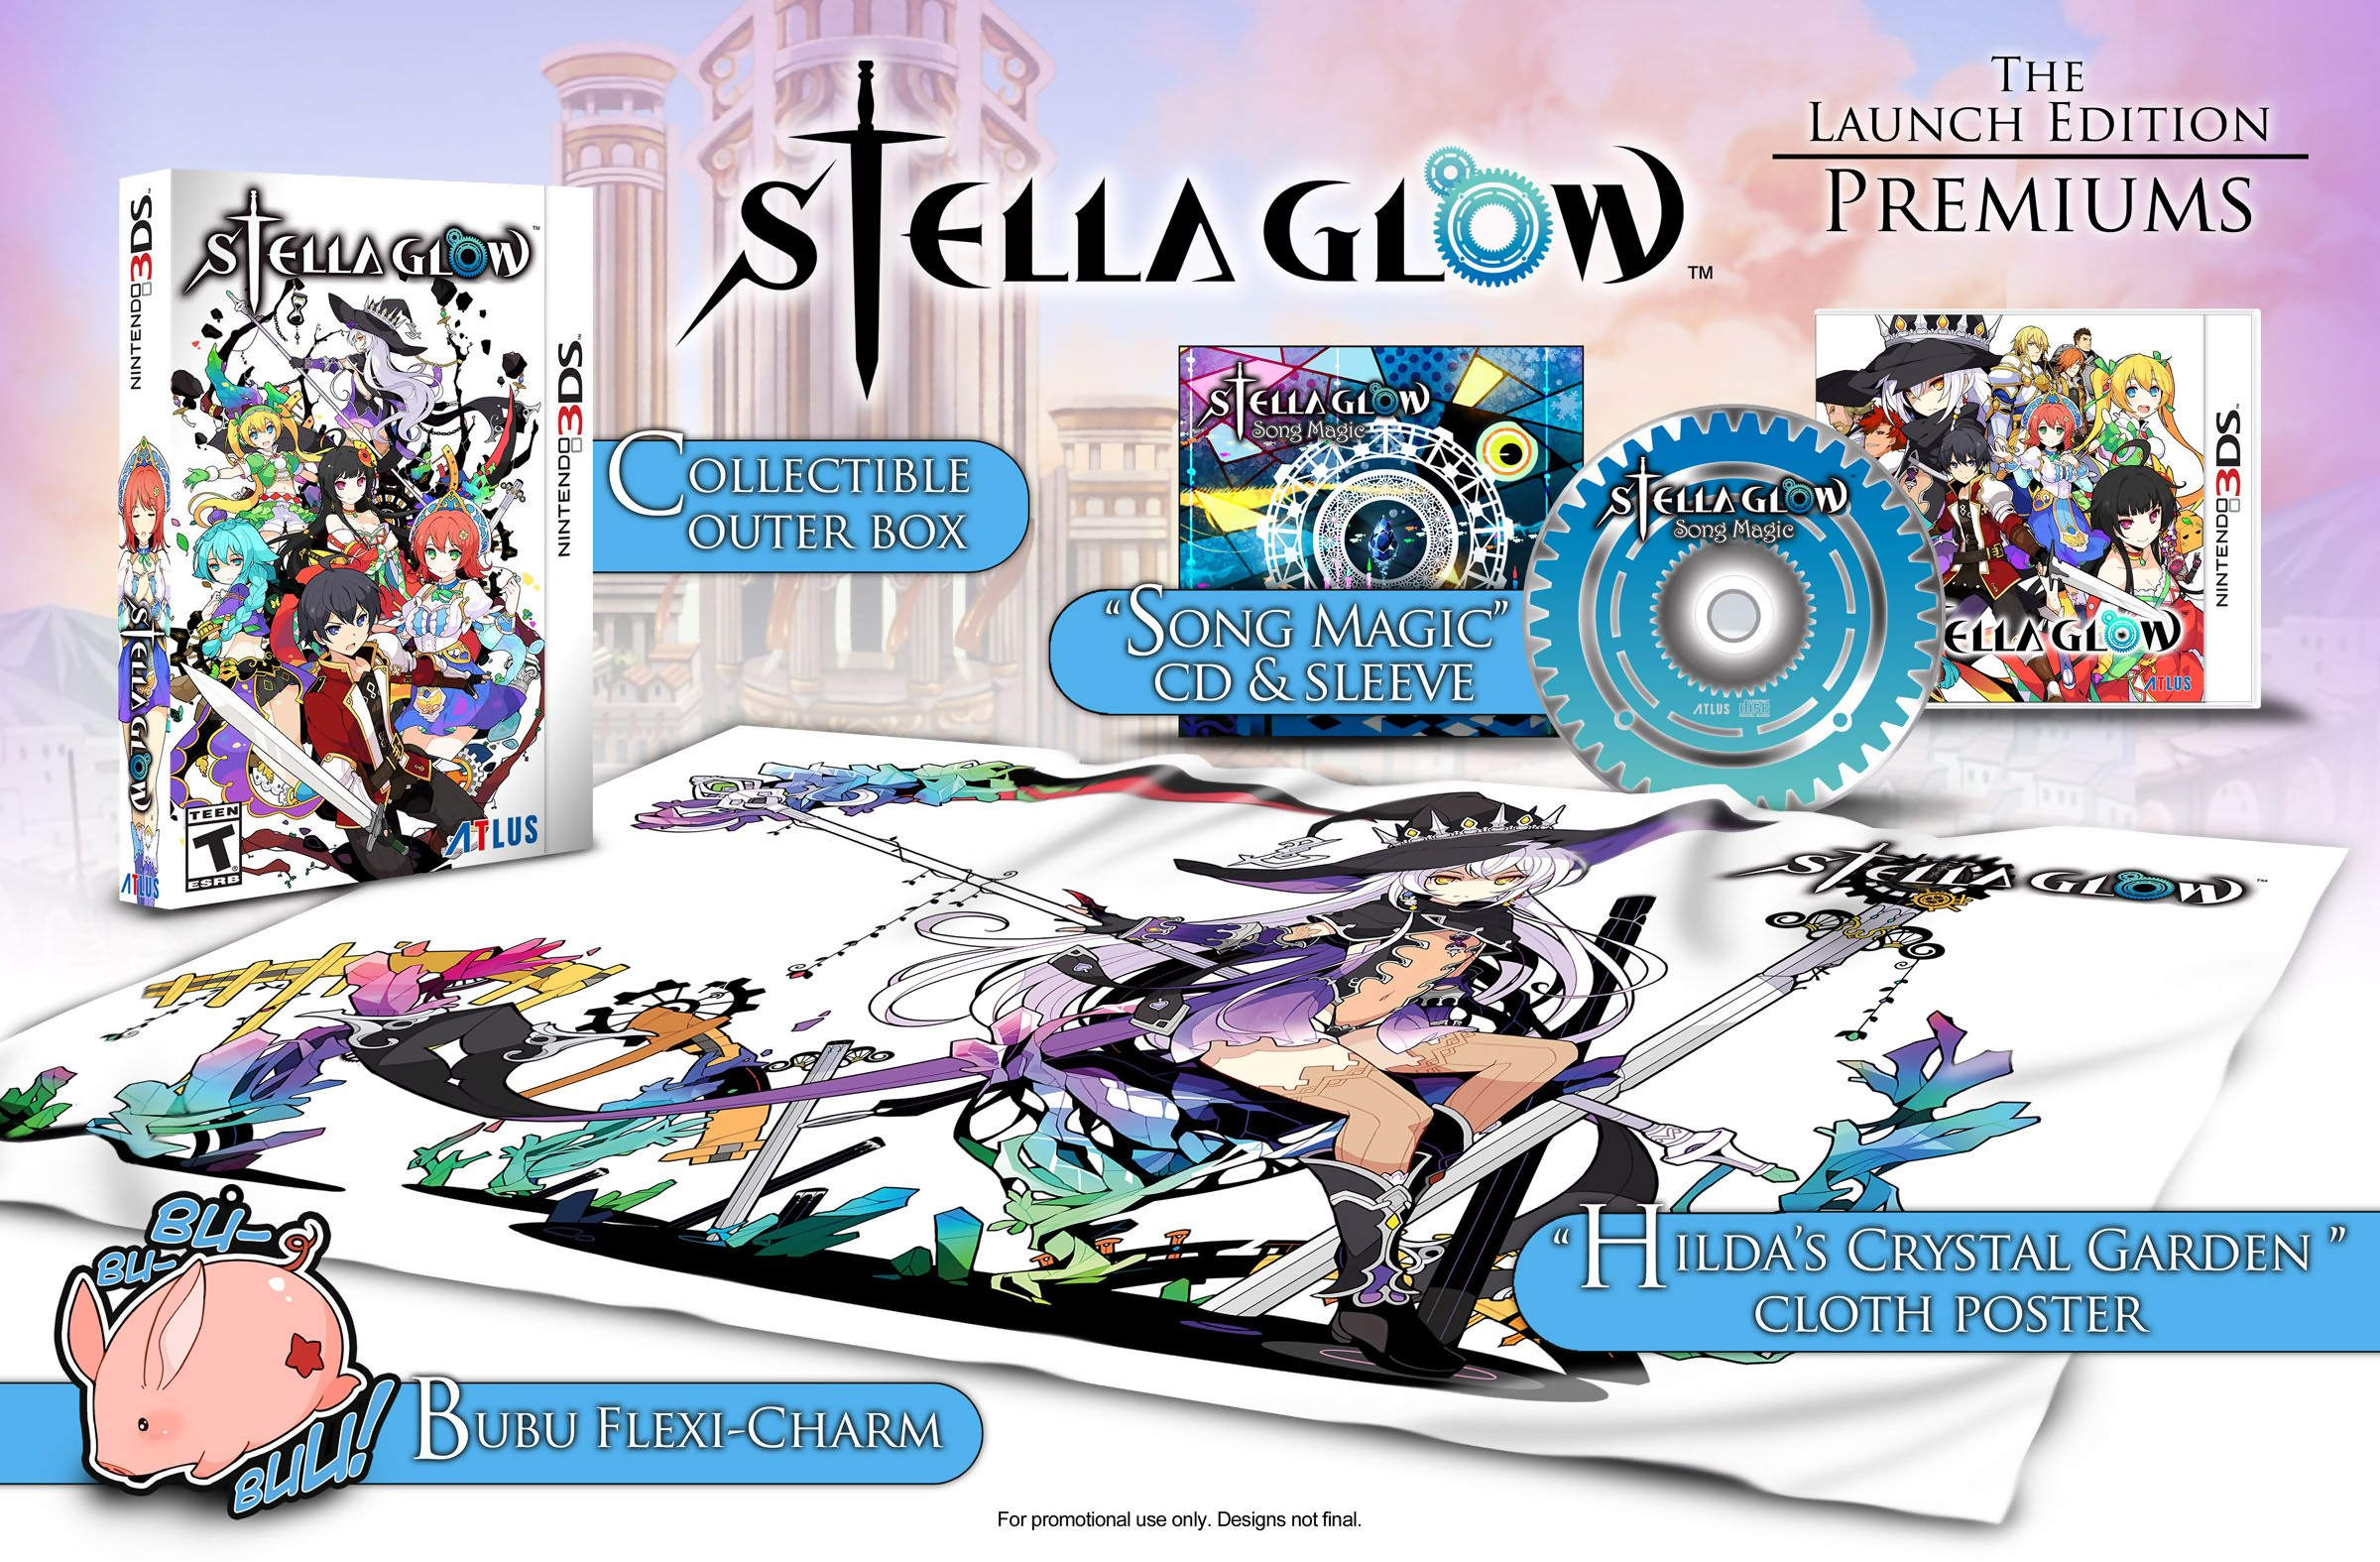 StellaGlow promo.jpg